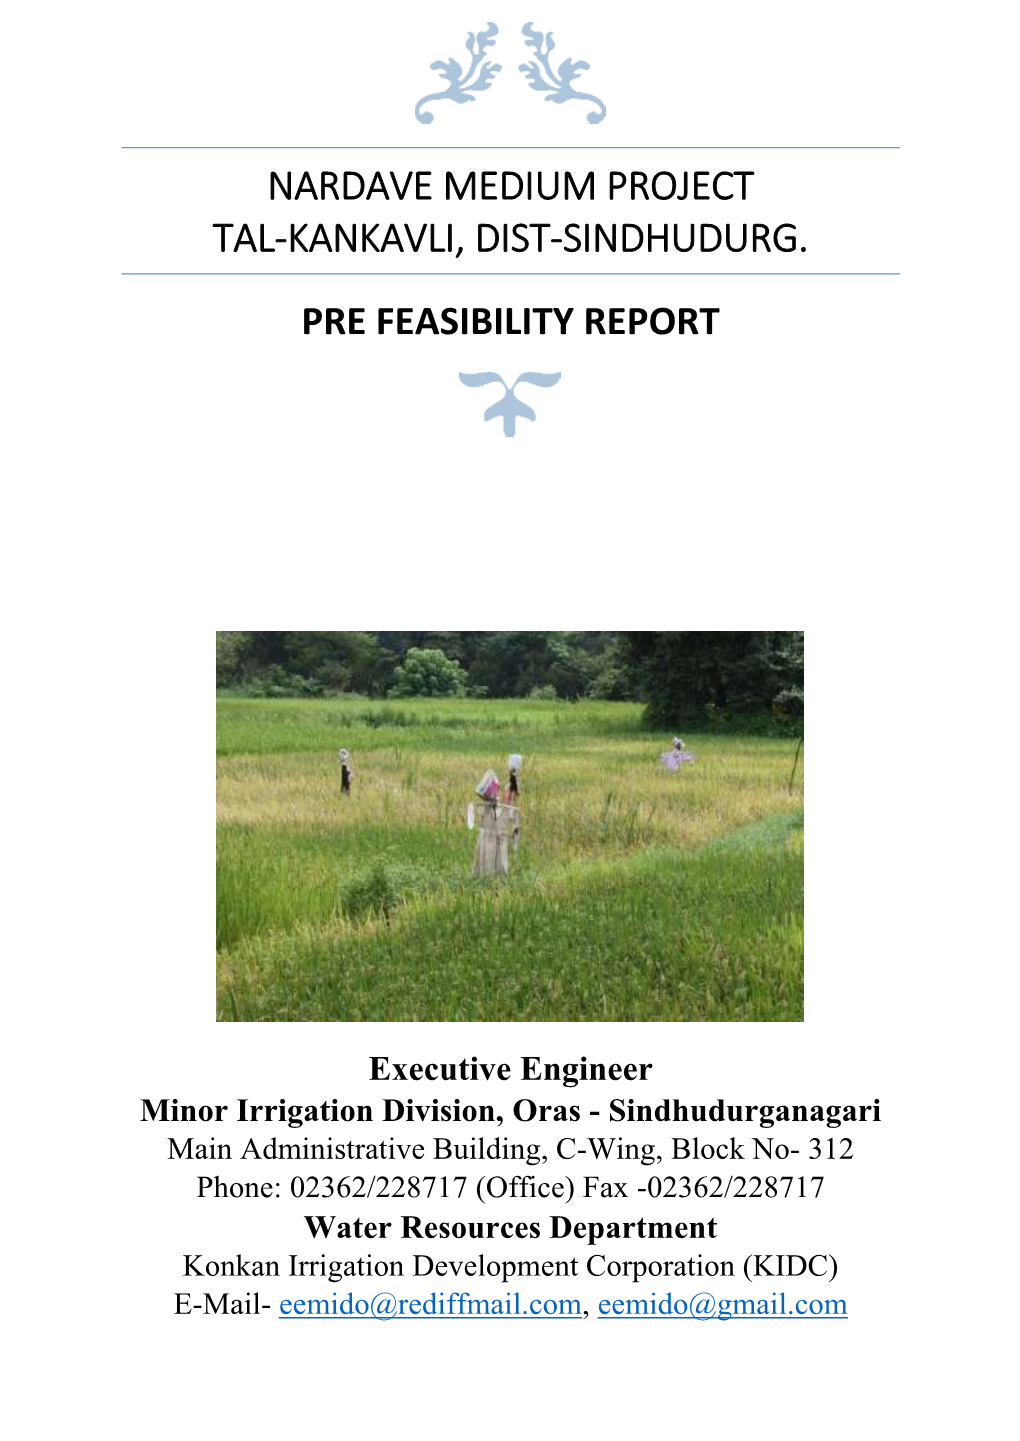 Nardave Medium Project Tal-Kankavli, Dist-Sindhudurg. Pre Feasibility Report